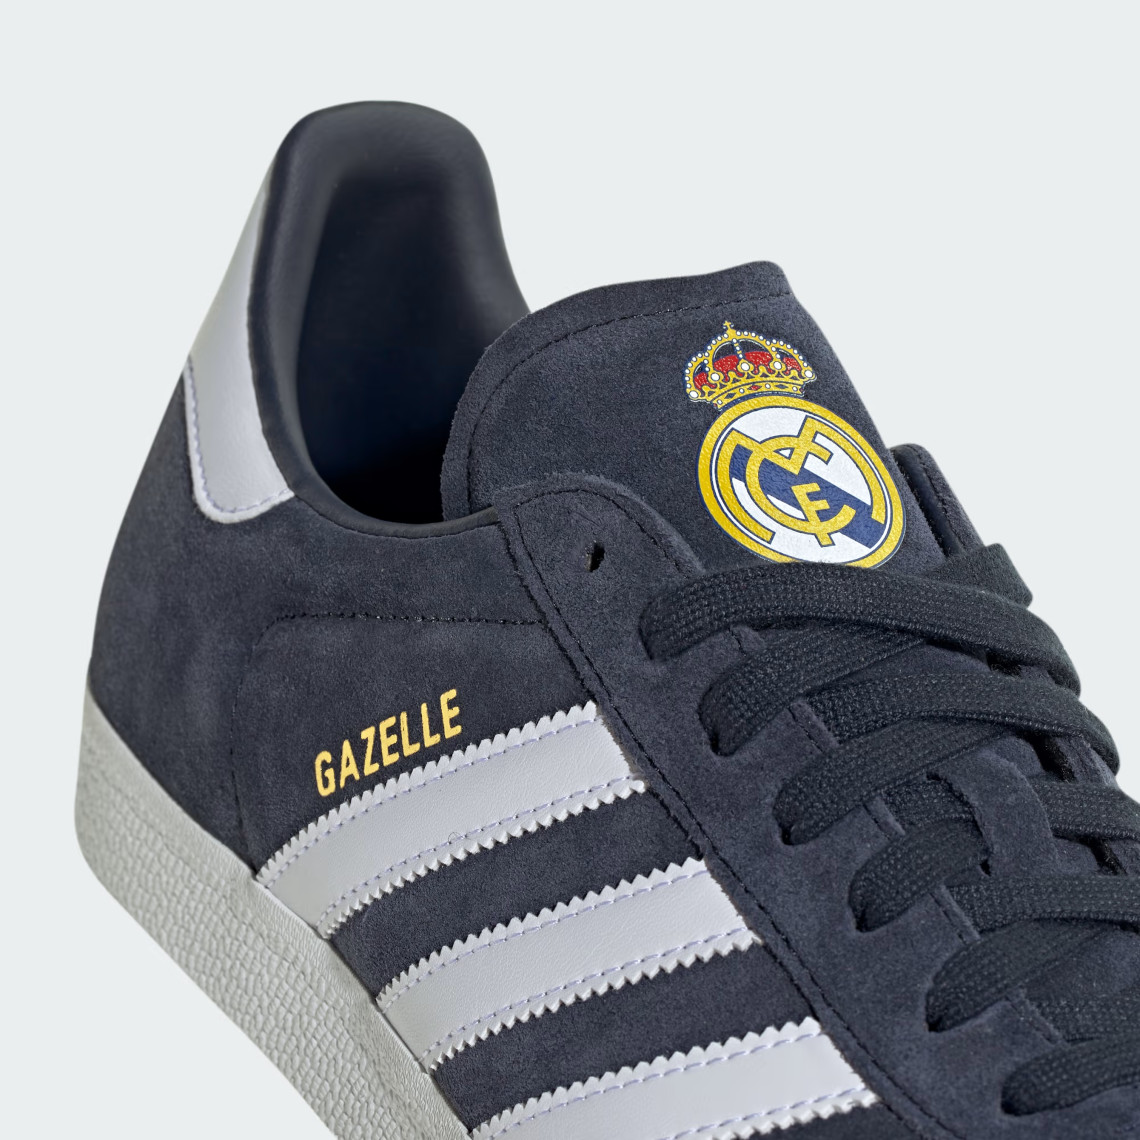 Real Madrid Adidas Gazelle Ie8503 7